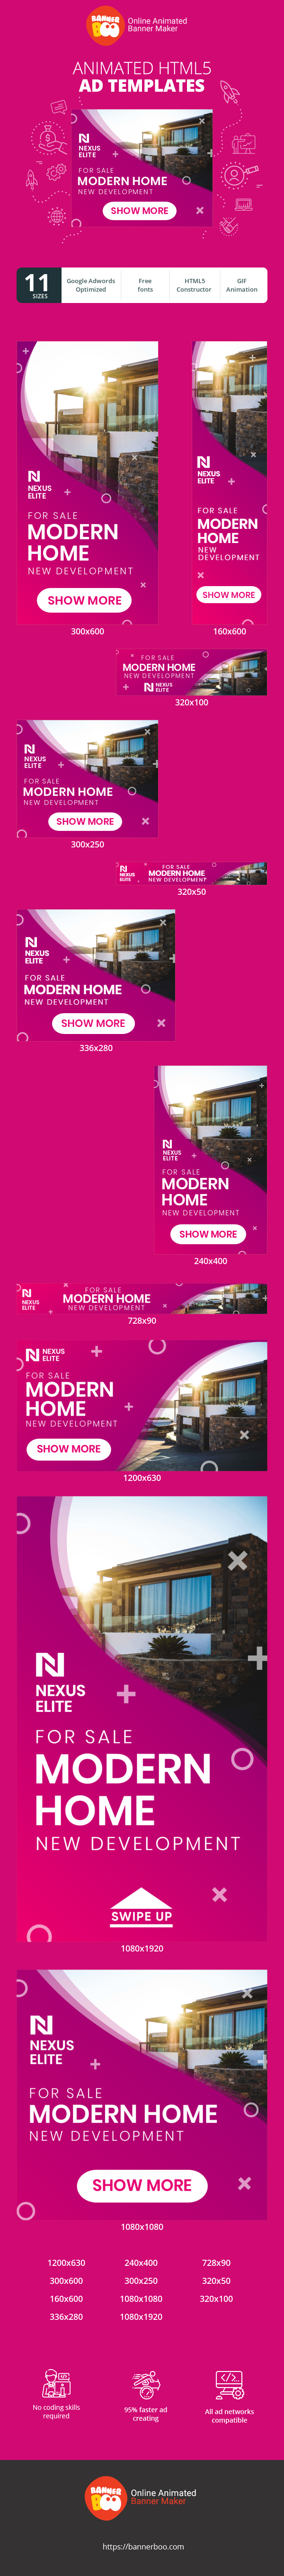 Szablon reklamy banerowej — Modern Home — For Sale New Development